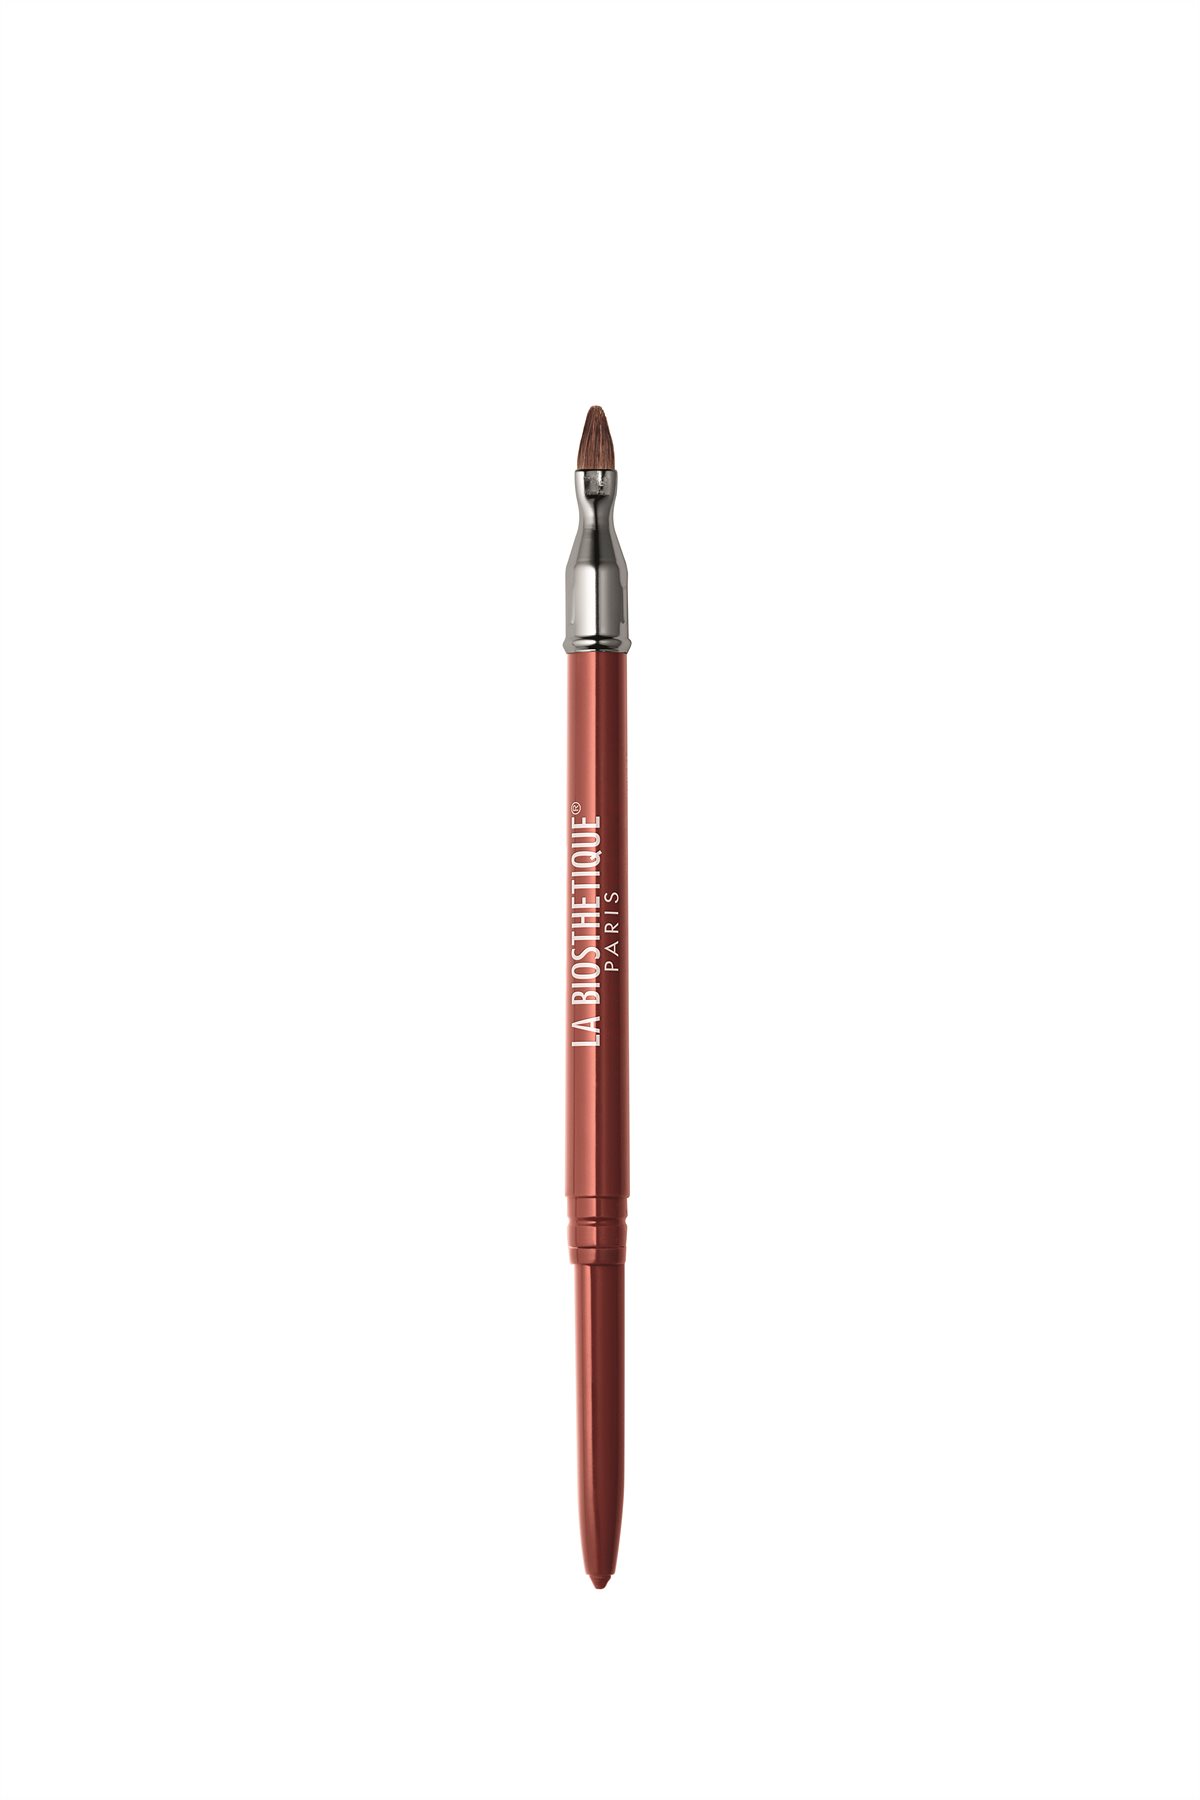 La Biosthétique_Lippenkonturenstift wischfest_Automatic Pencil for Lips LL36 Ginger_0,28 g_21.50 €